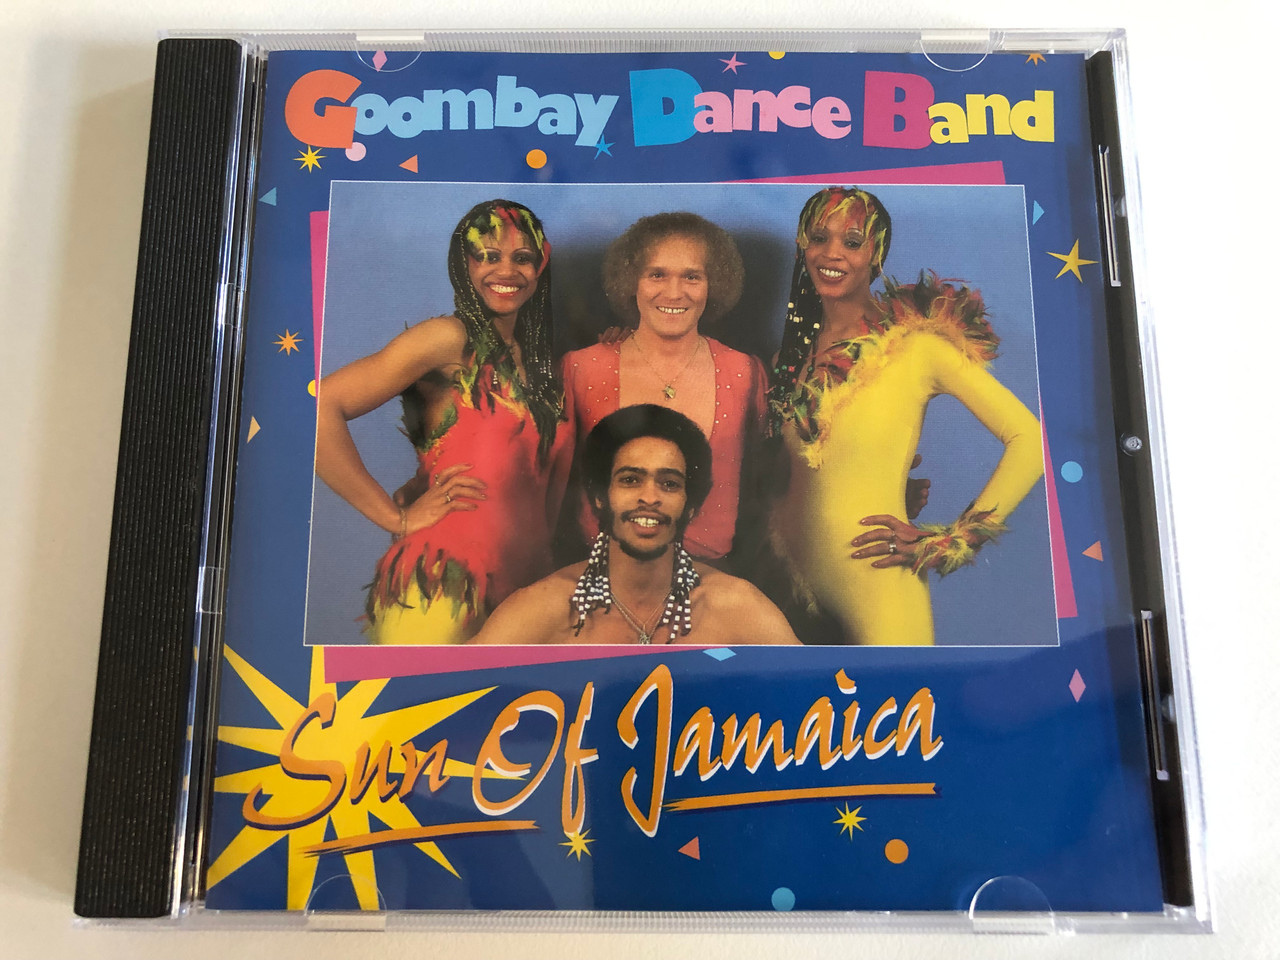 Goombay Dance Band – Sun Of Jamaica / BMG Audio CD 1995 Stereo / 74321  28841 2 - bibleinmylanguage